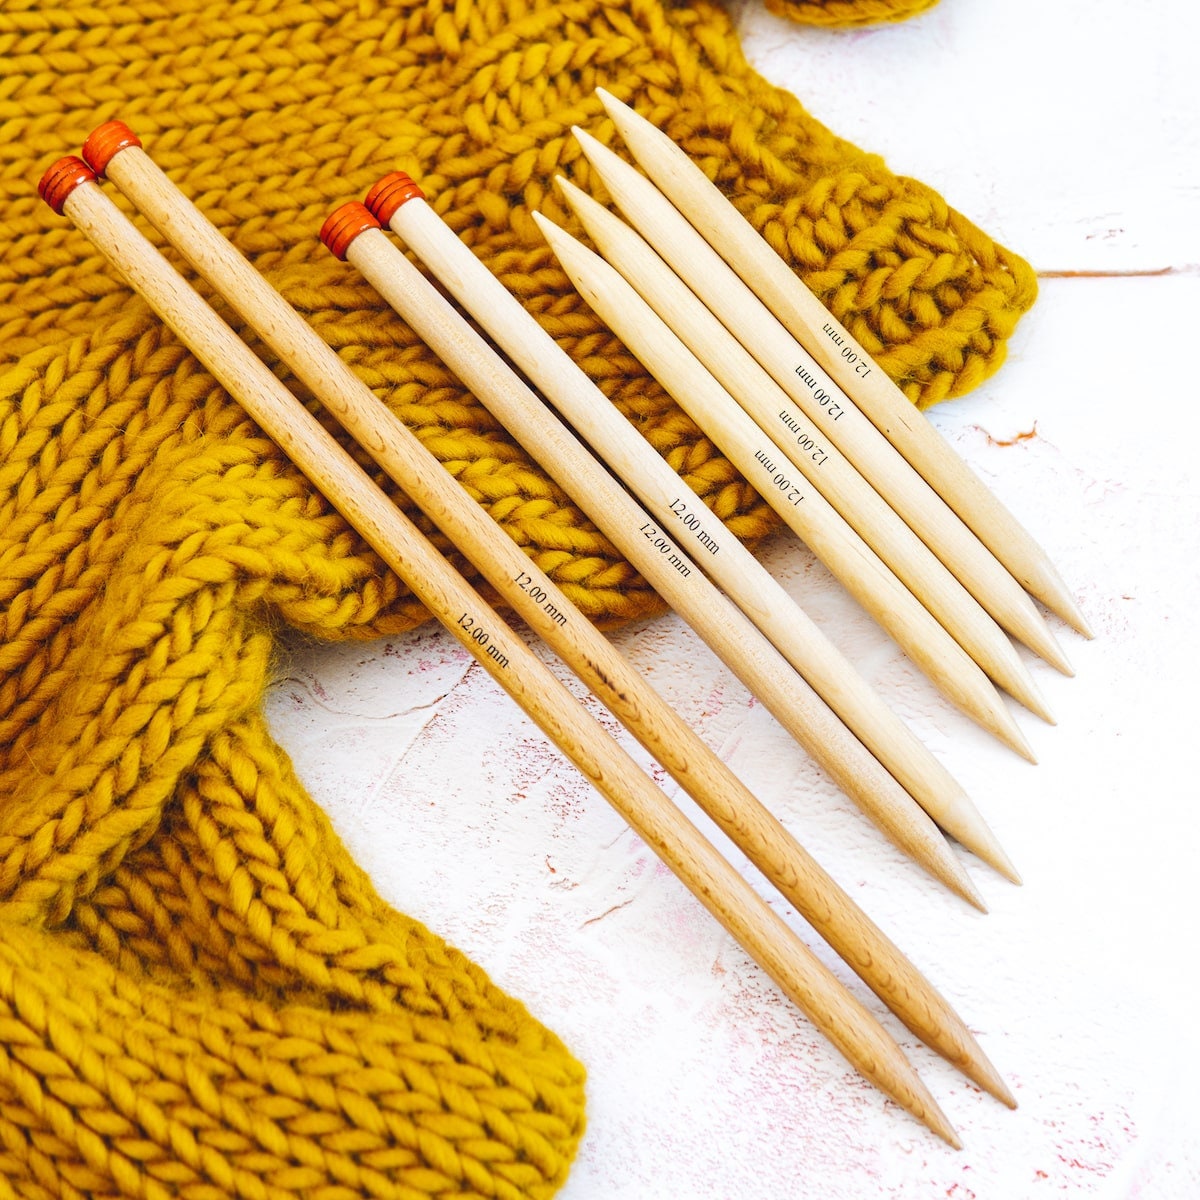 Bamboo Knitting Needles 15mm / Wooden Knitting Needles US19